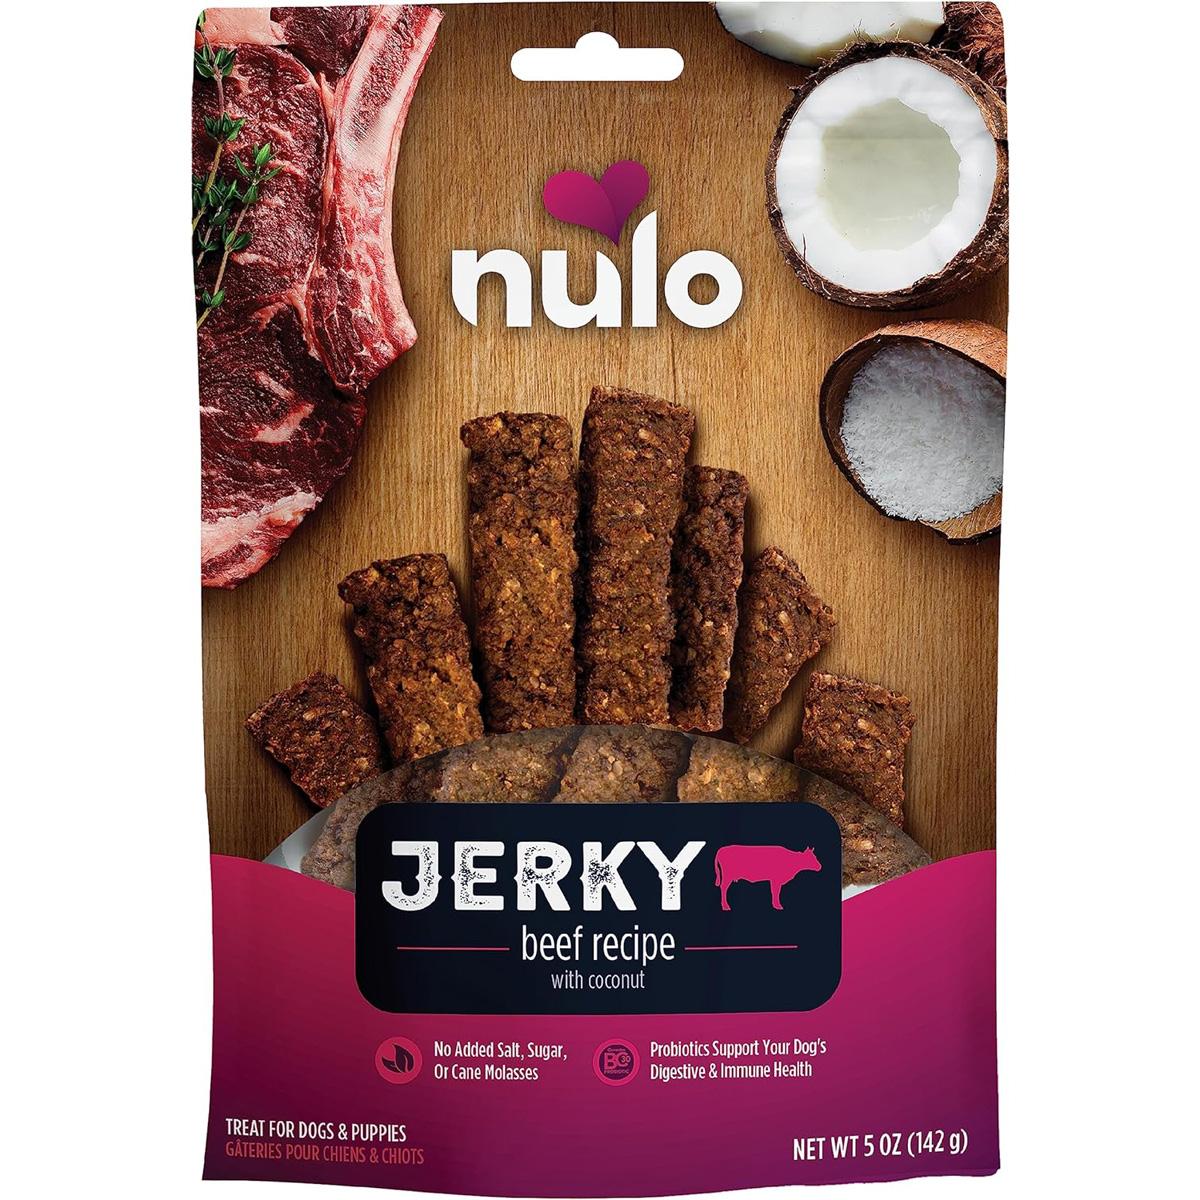 Nulo Premium Jerky Strips Dog Treats for $4.22 Shipped